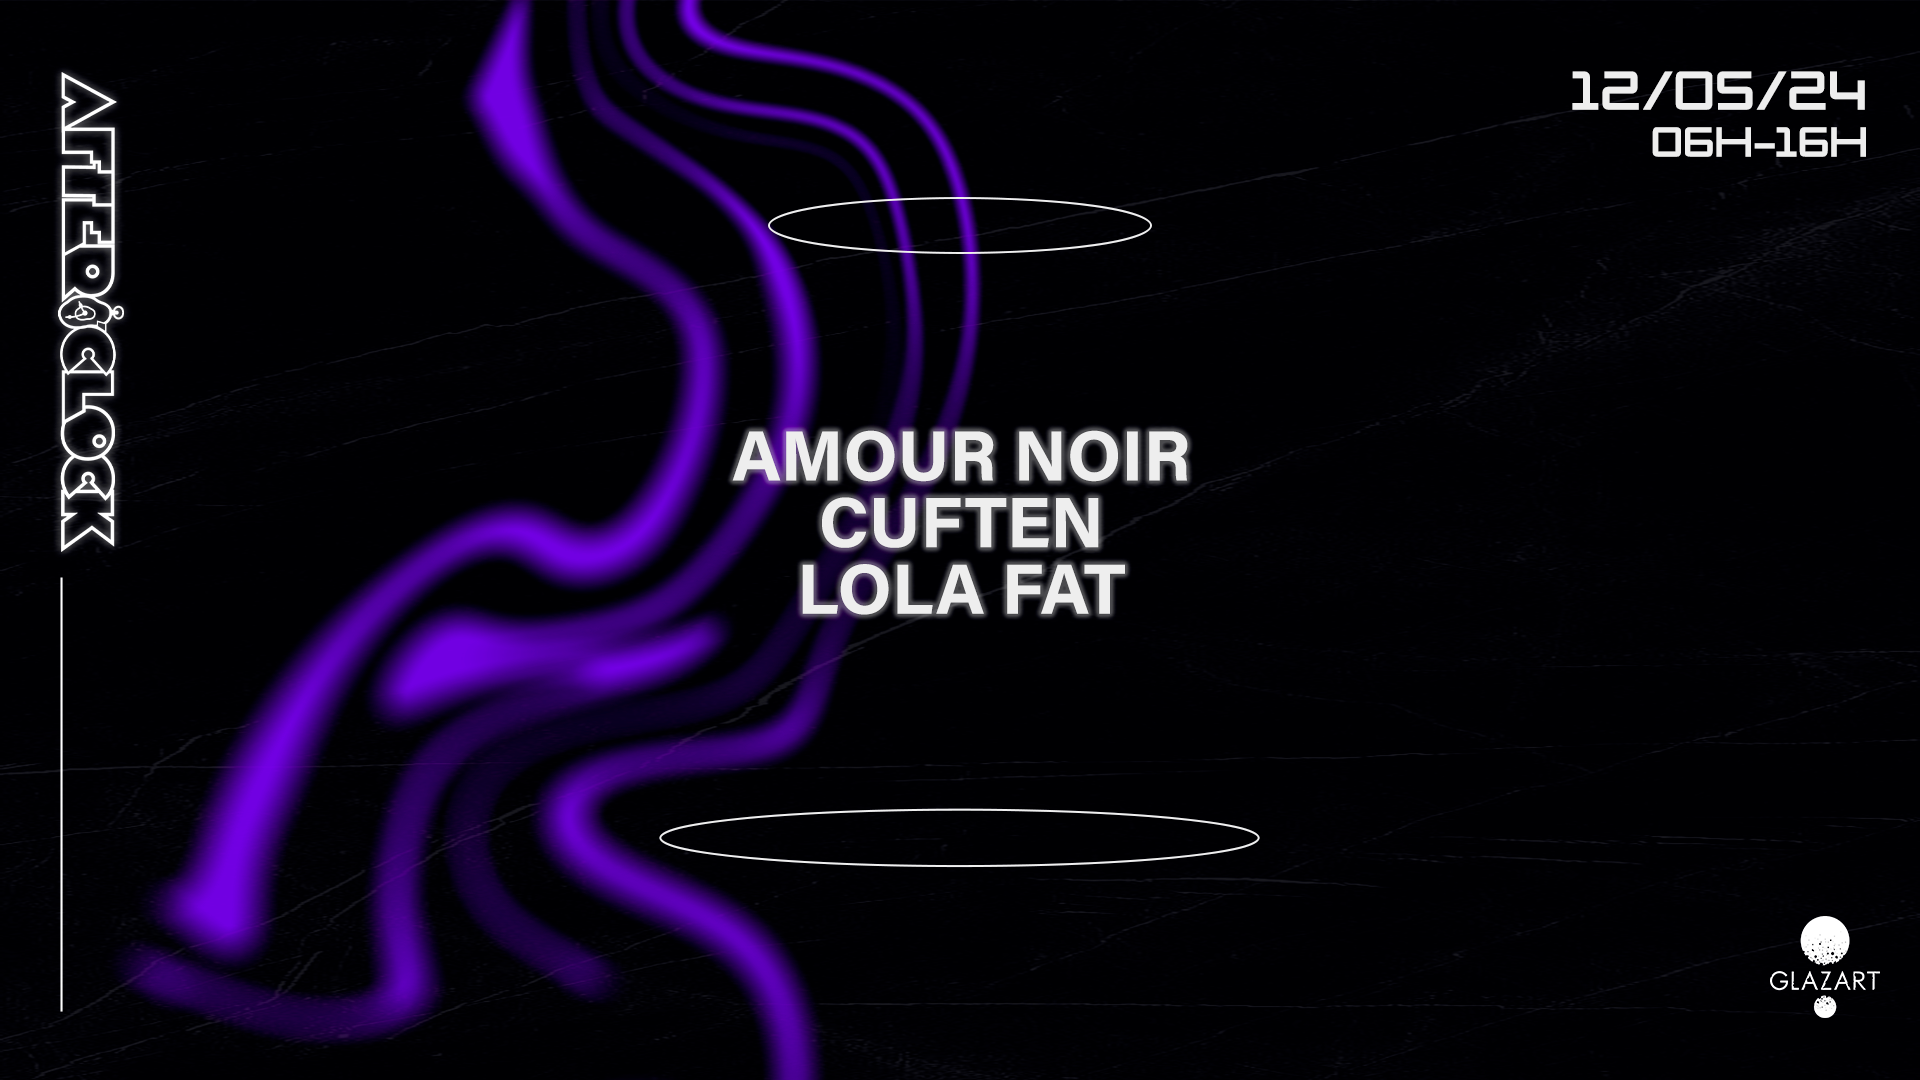 After O'Clock: Cuften, Amour Noir, Lola Fat - フライヤー表